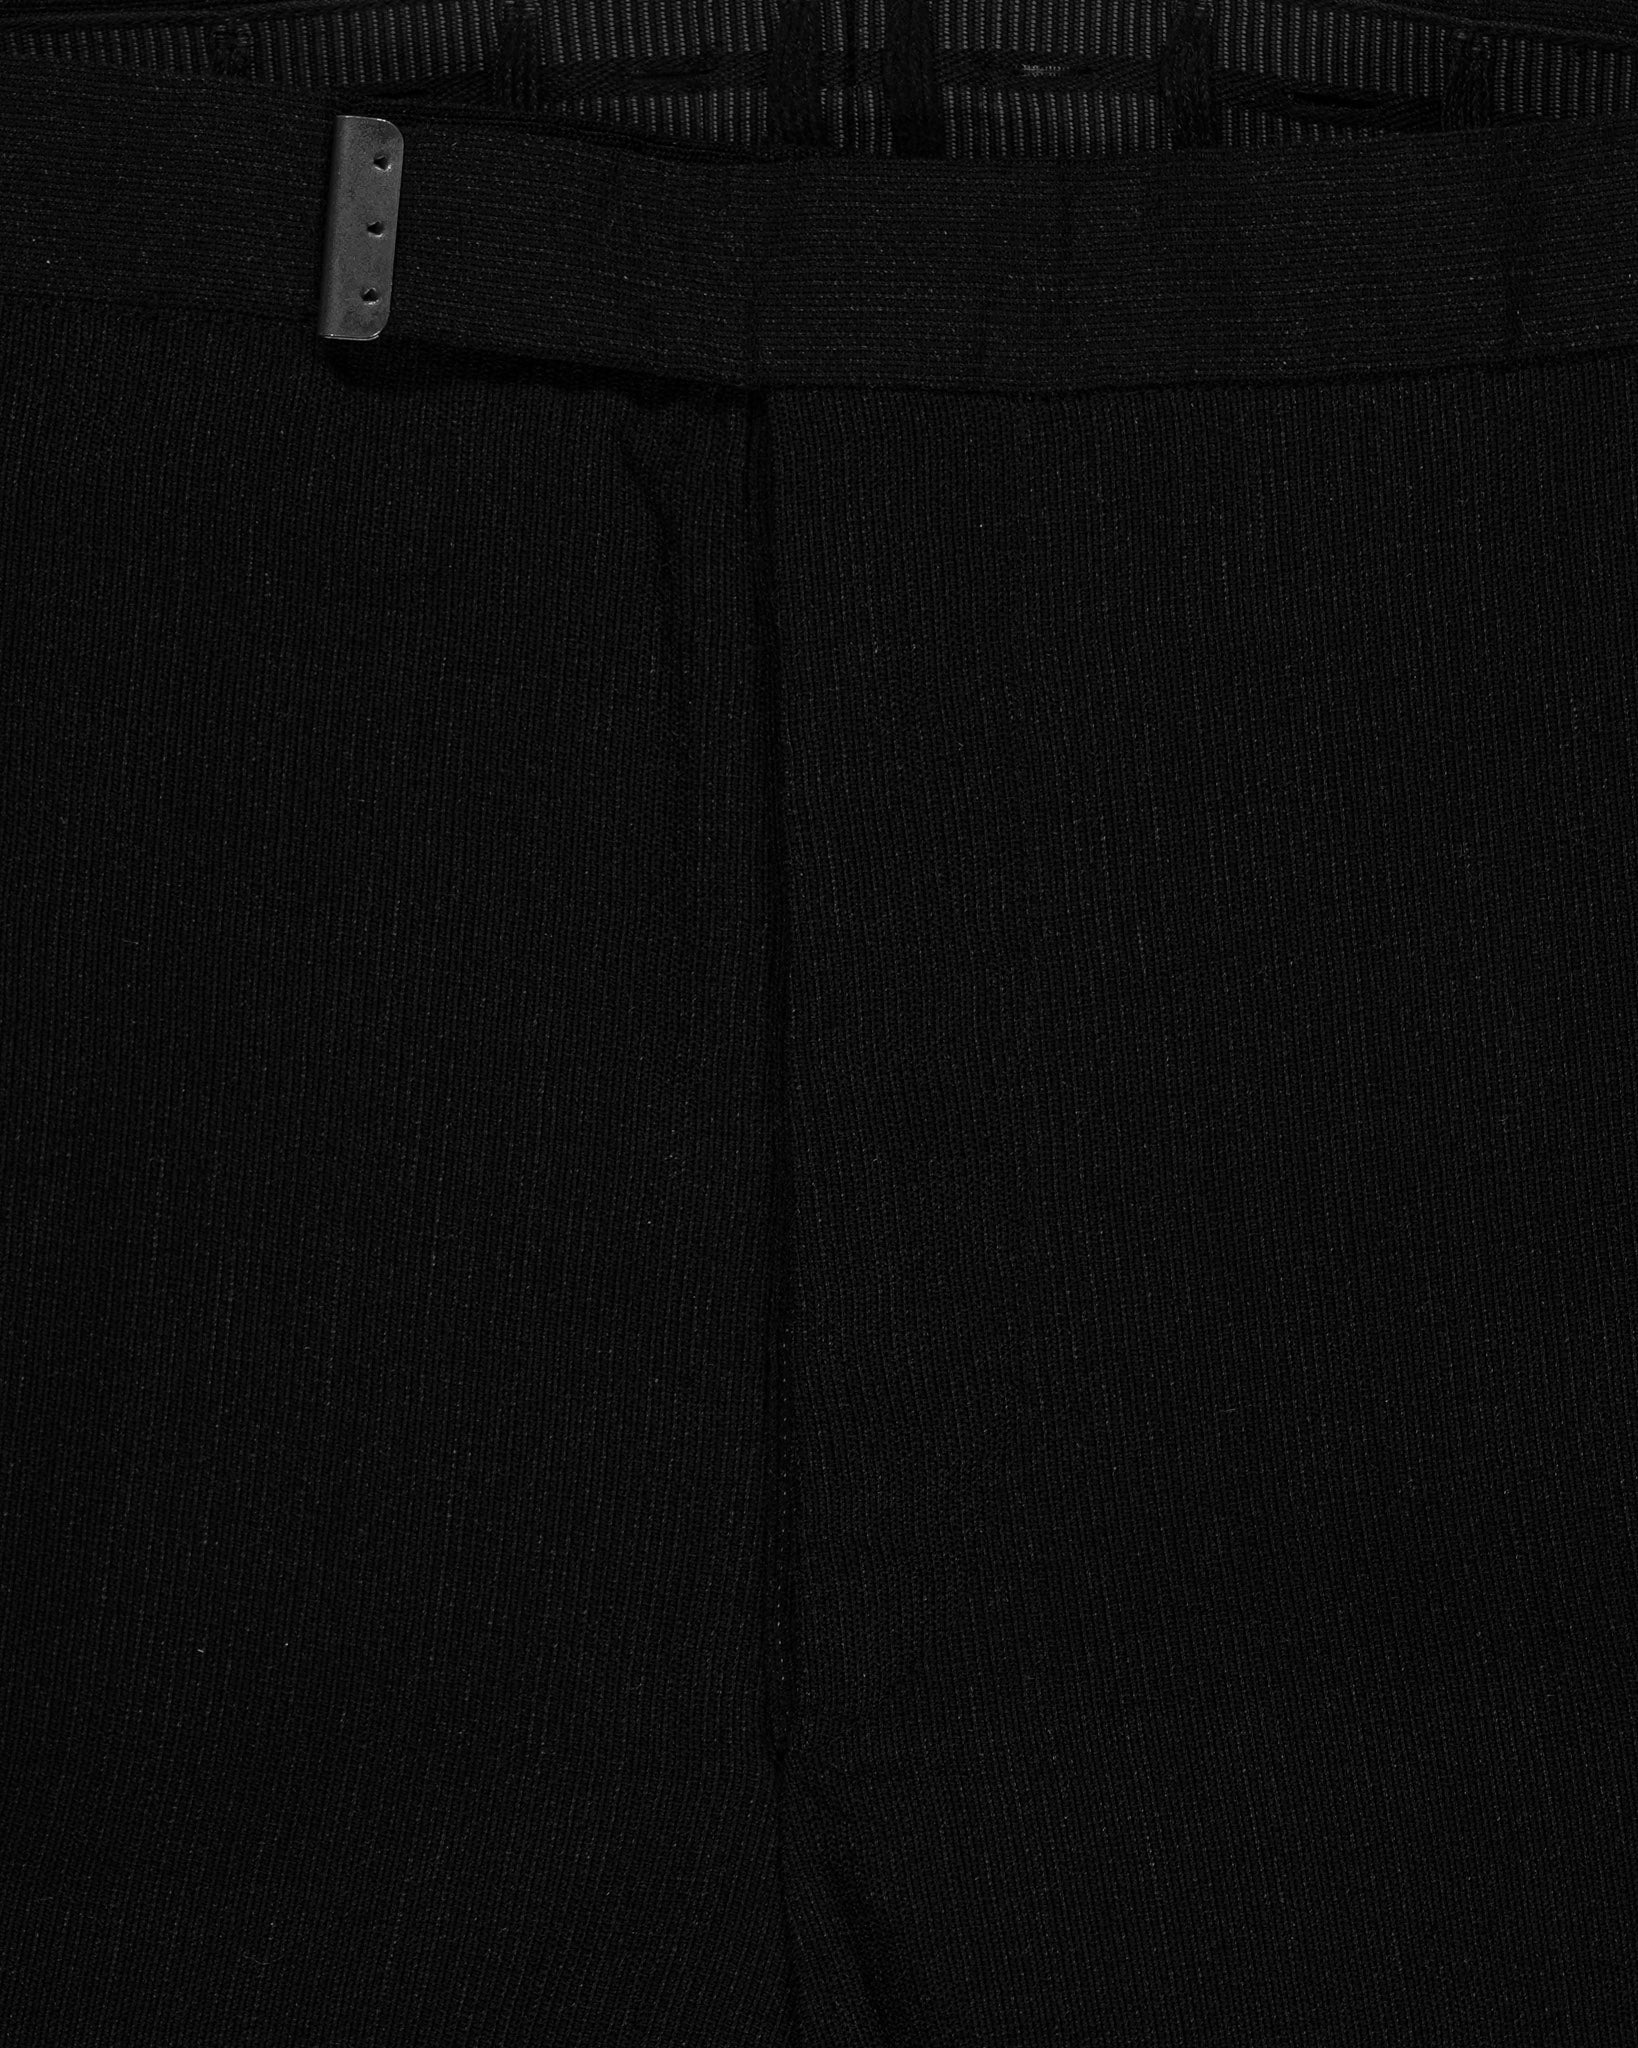 Carol Christian Poell Breadstick Trousers - 2009 "Self-Same" (PM/2414 NICHT/11)